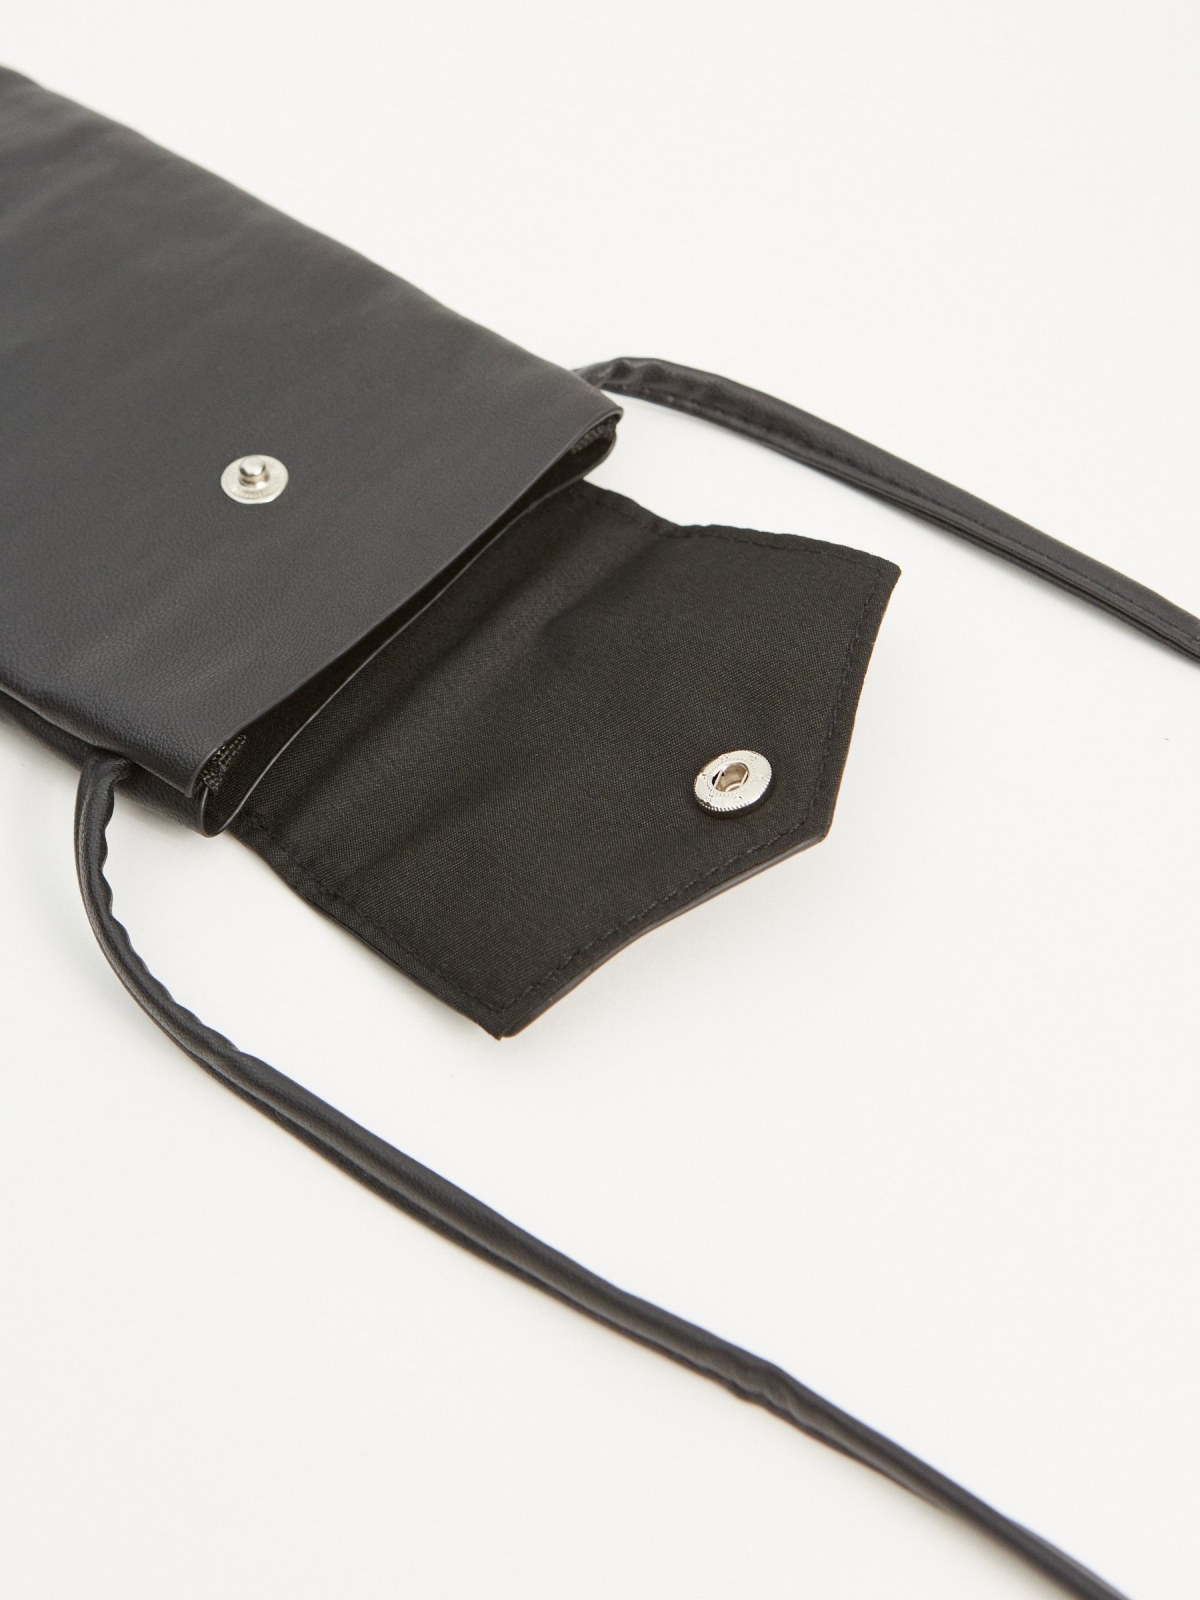 Studded smartphone bag black detail view